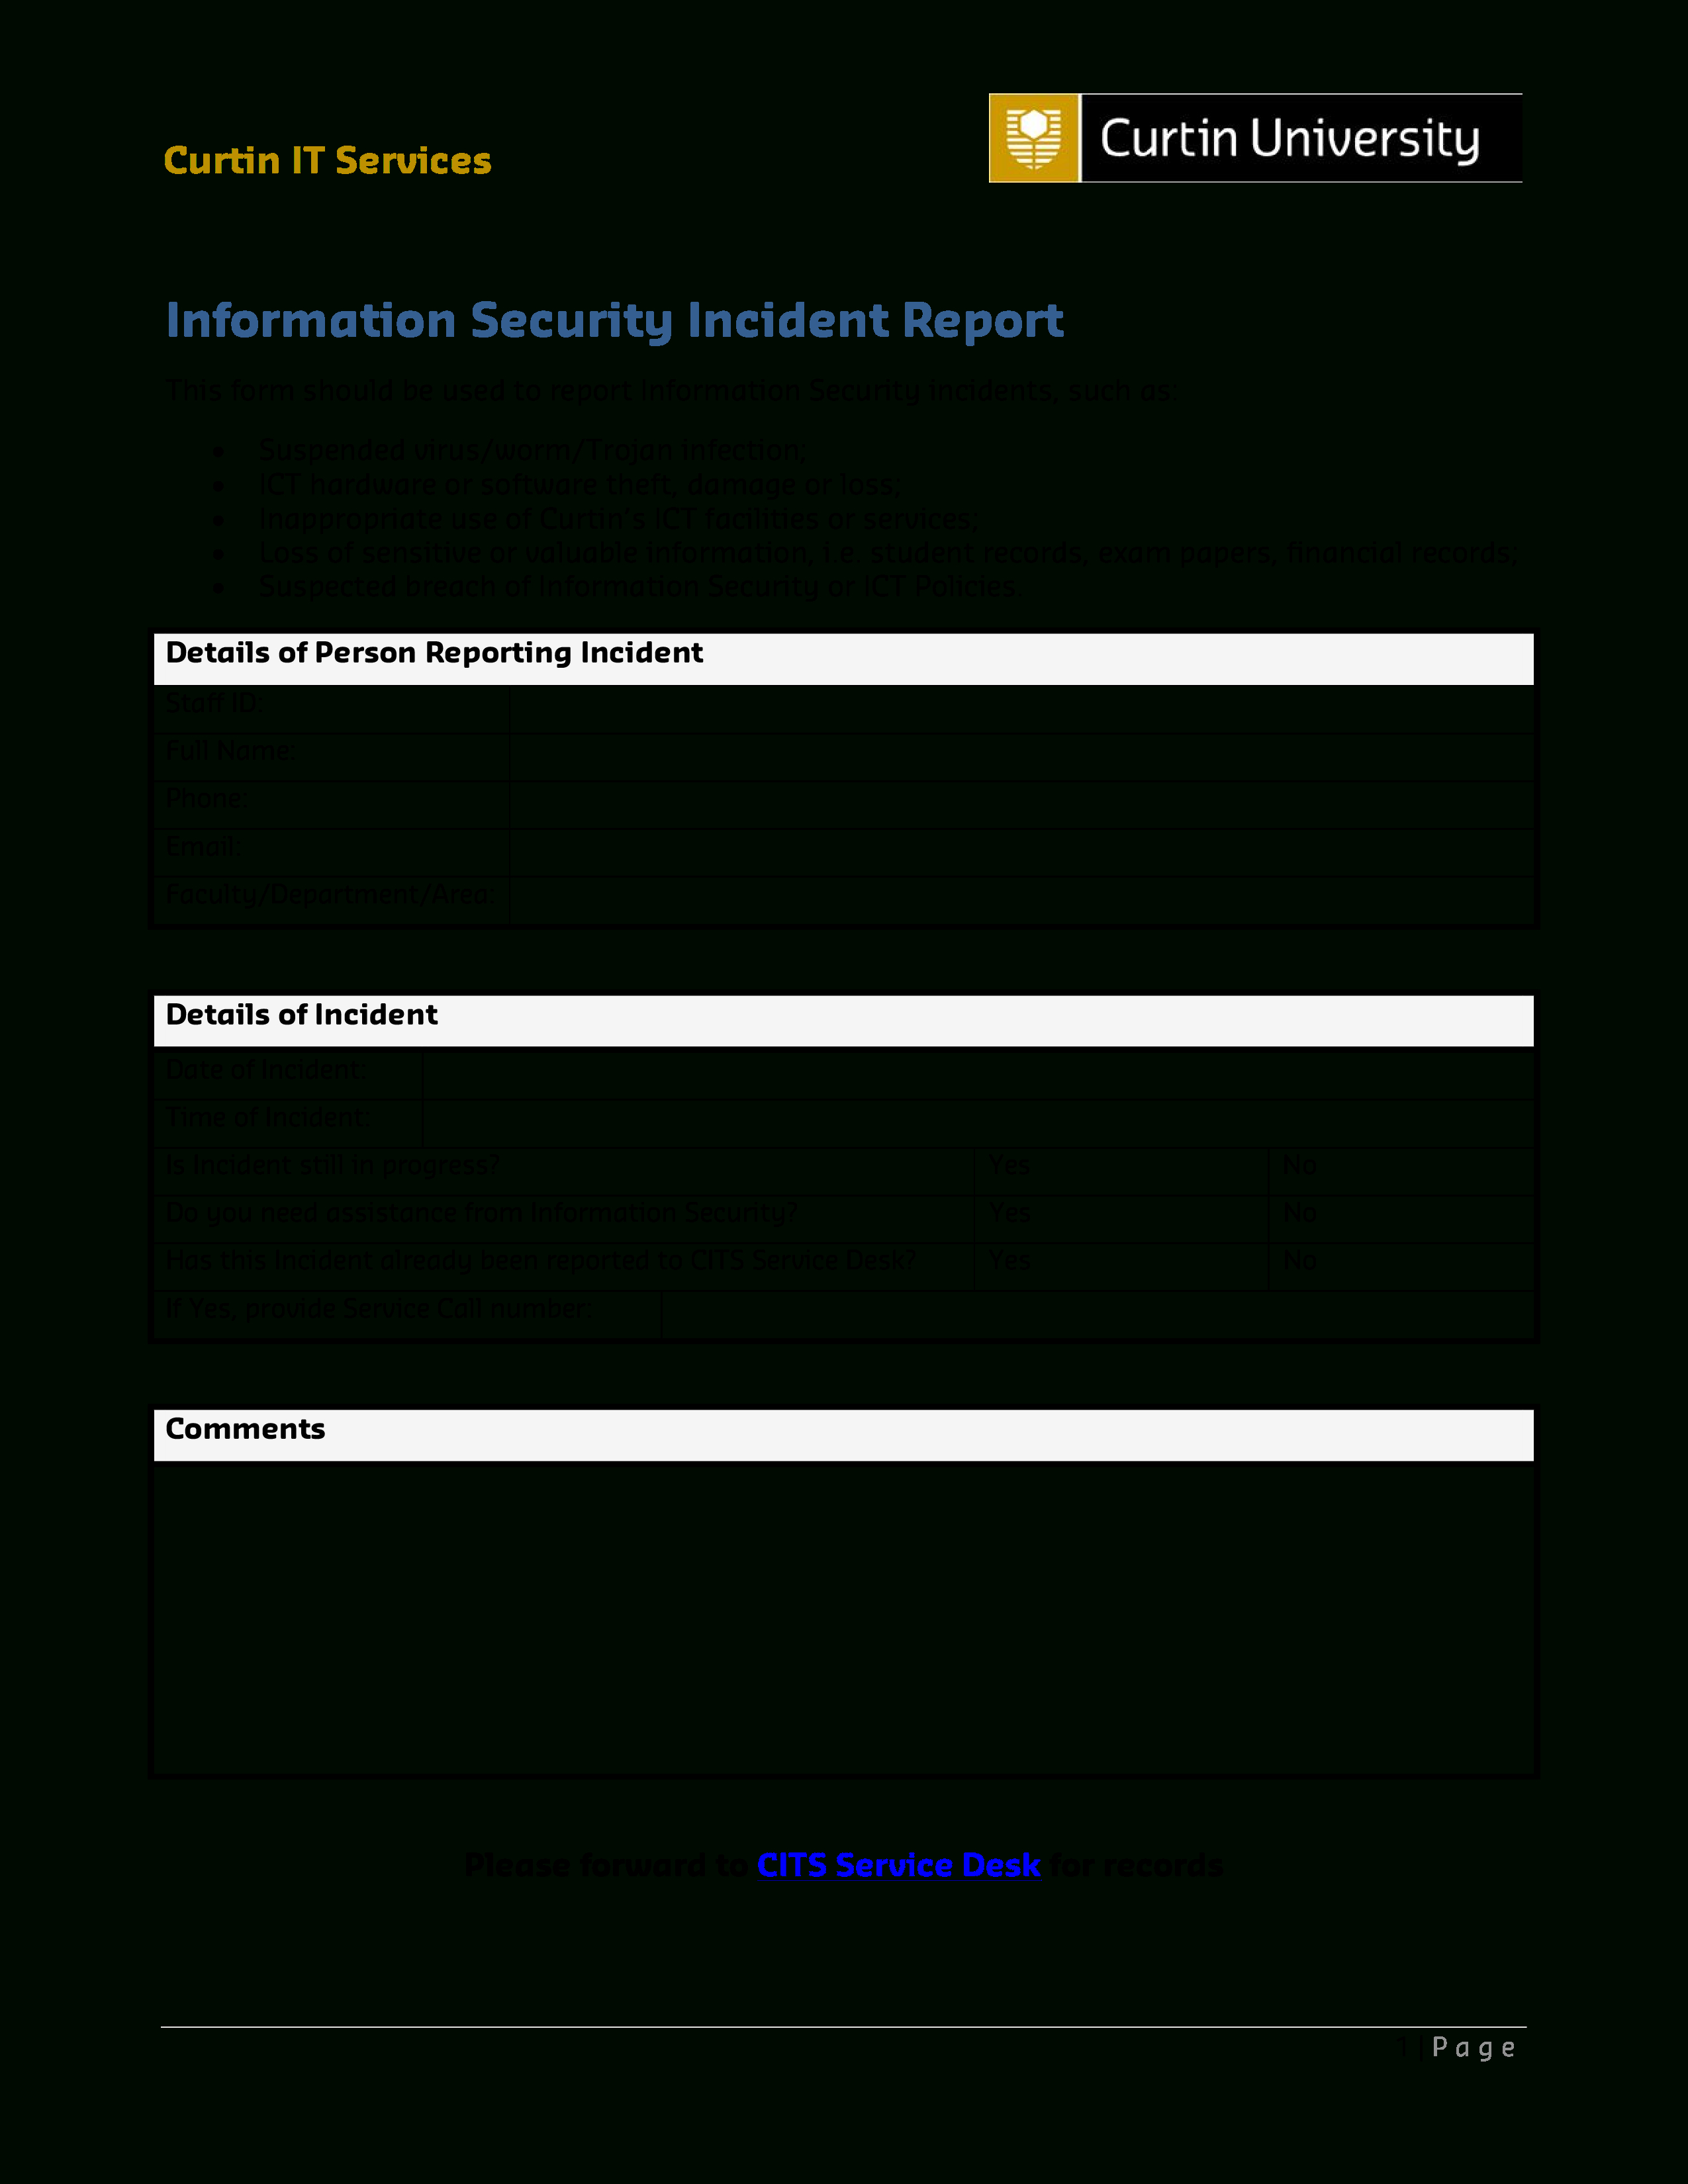 010 Security Incident Report Template Ideas 808C99D79Df8 1 Regarding Information Security Report Template